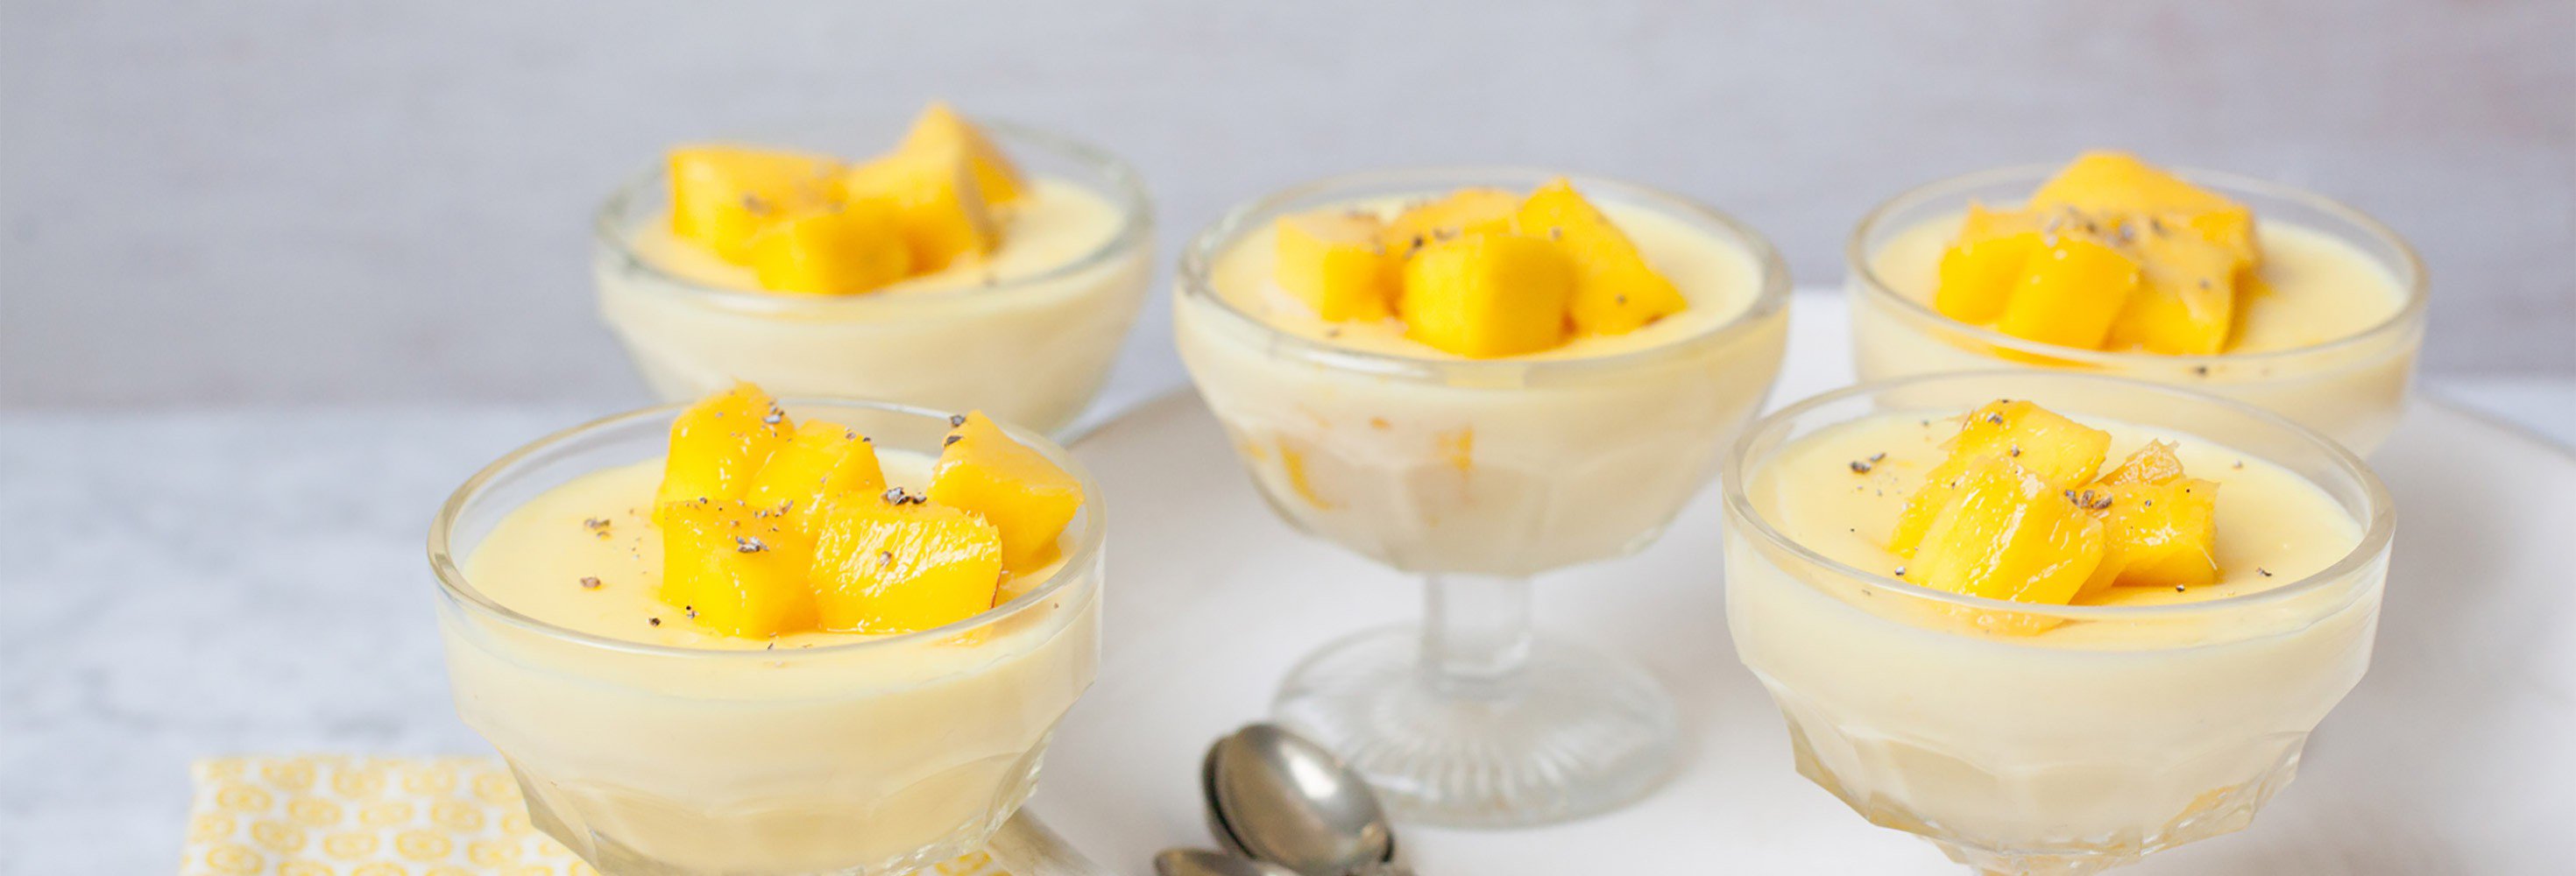 Pudding met mango en cardamom